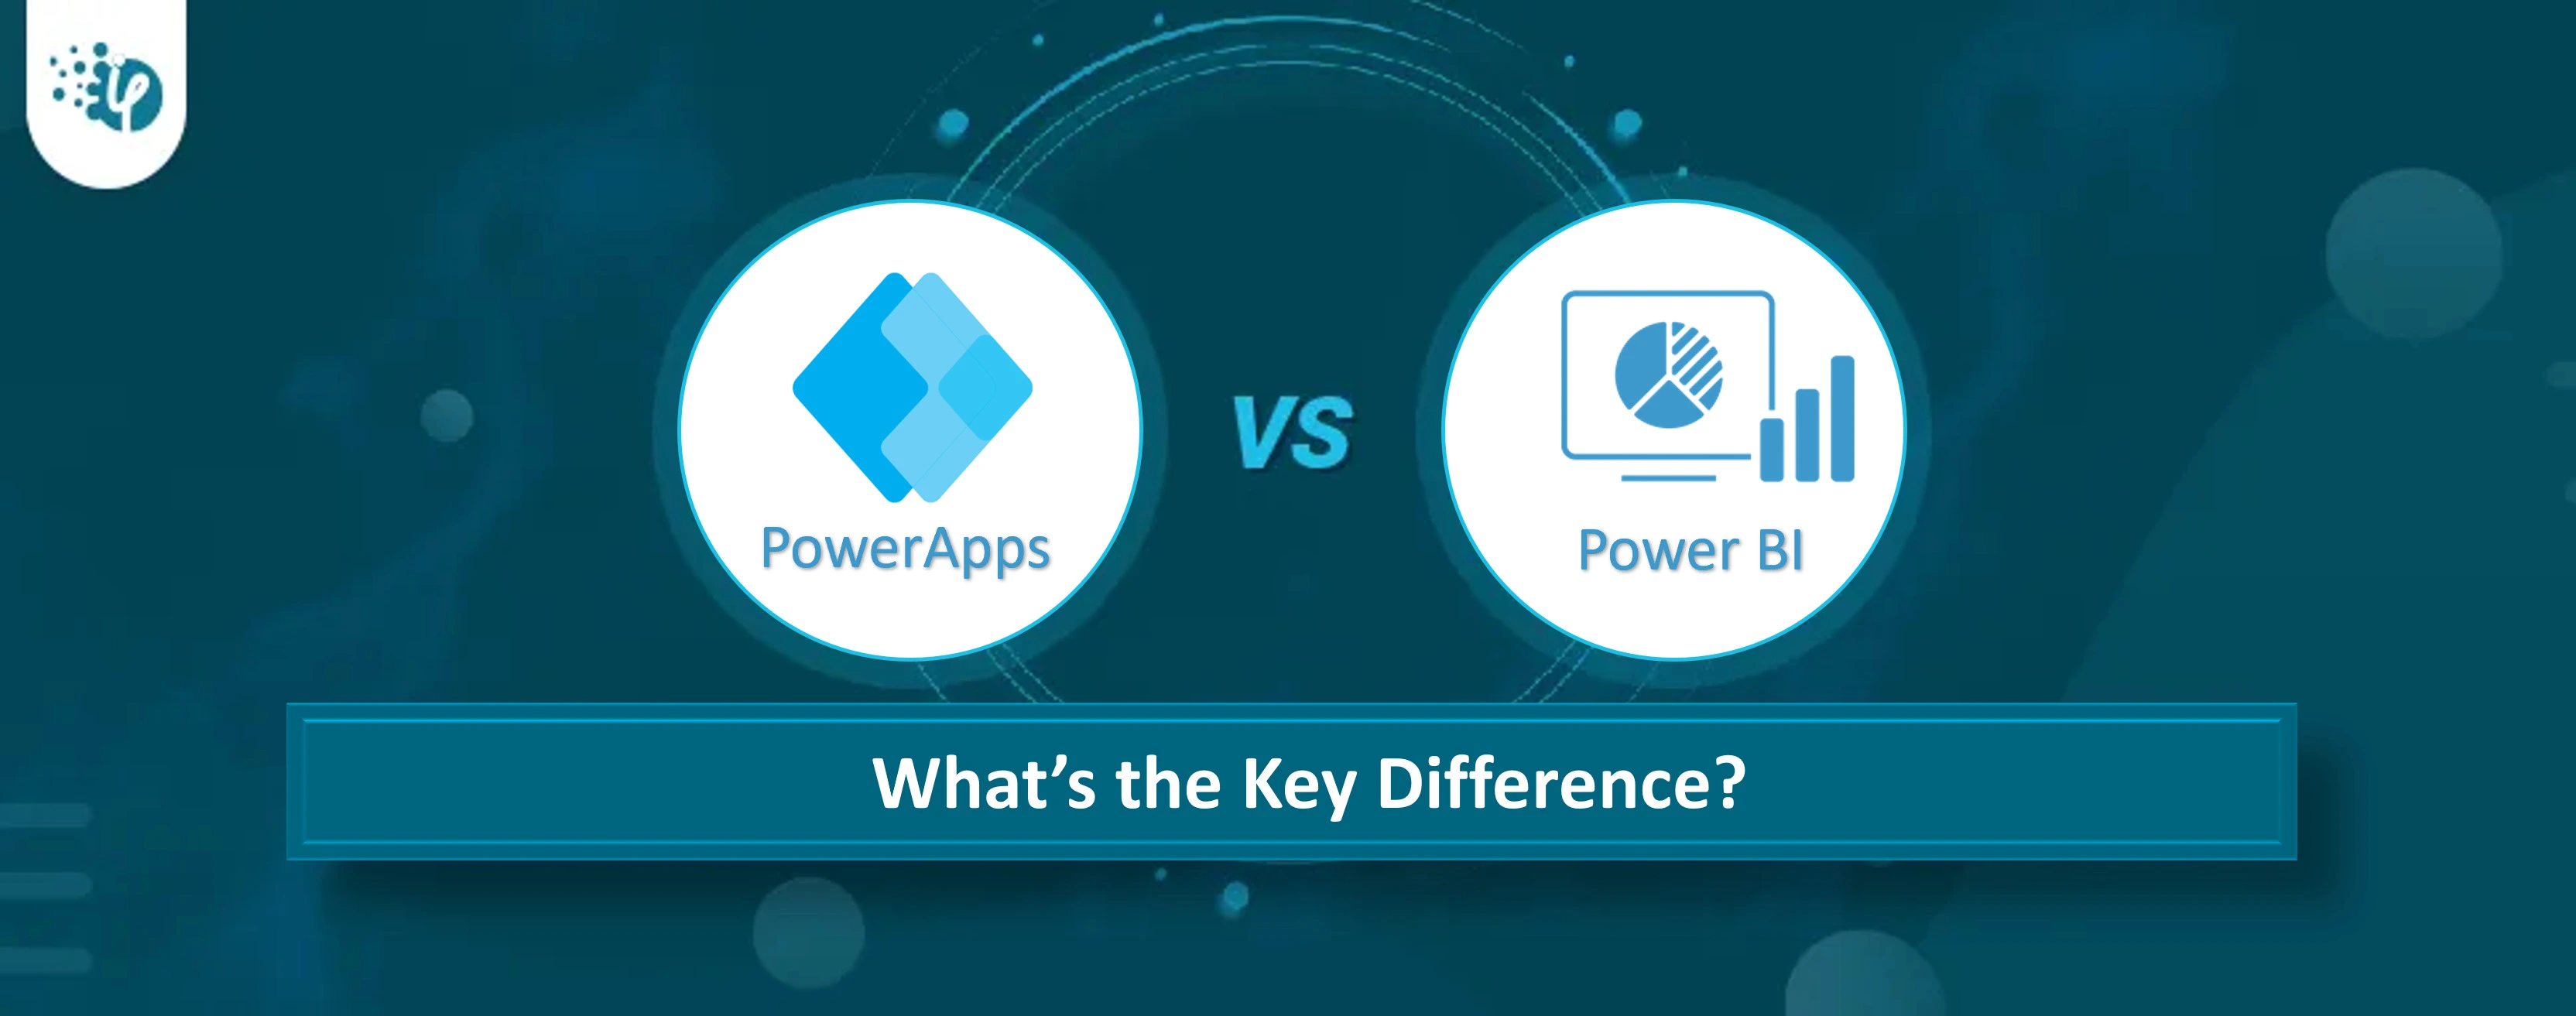 PowerApps development vs Power BI development: What's the difference